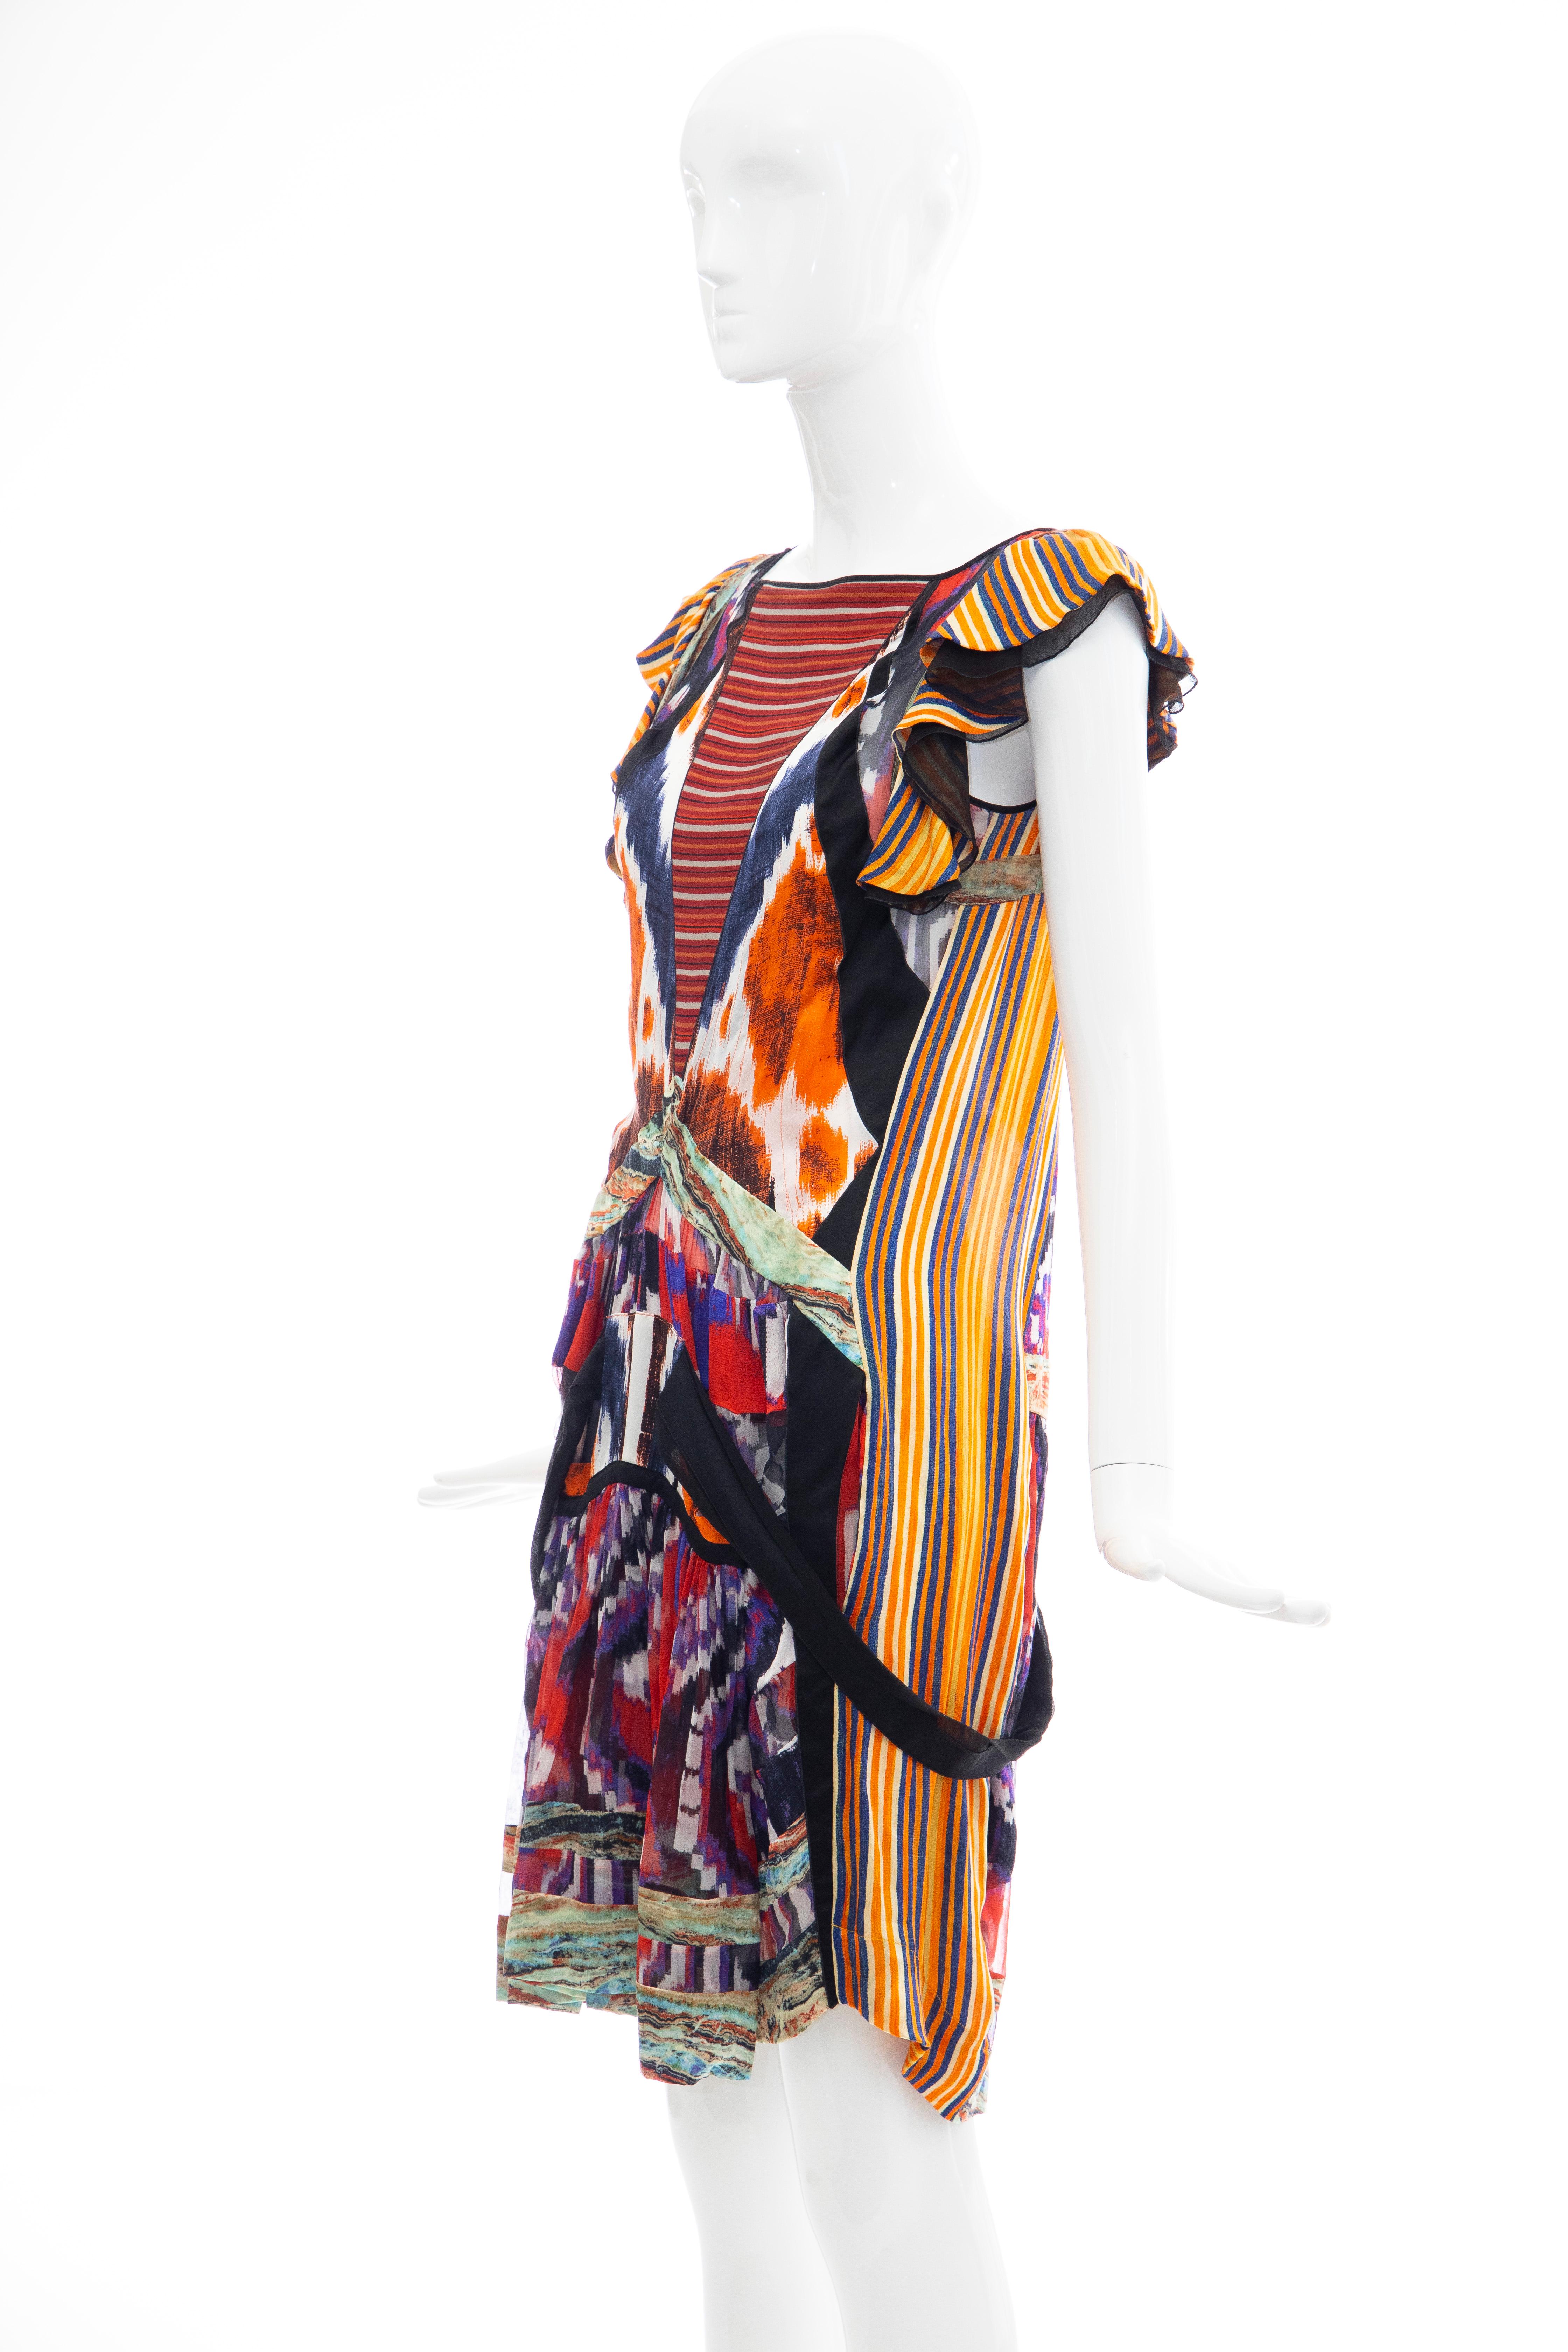  Nicolas Ghesquière for Balenciaga Runway Silk Ikat Print Dress, Fall 2007 5